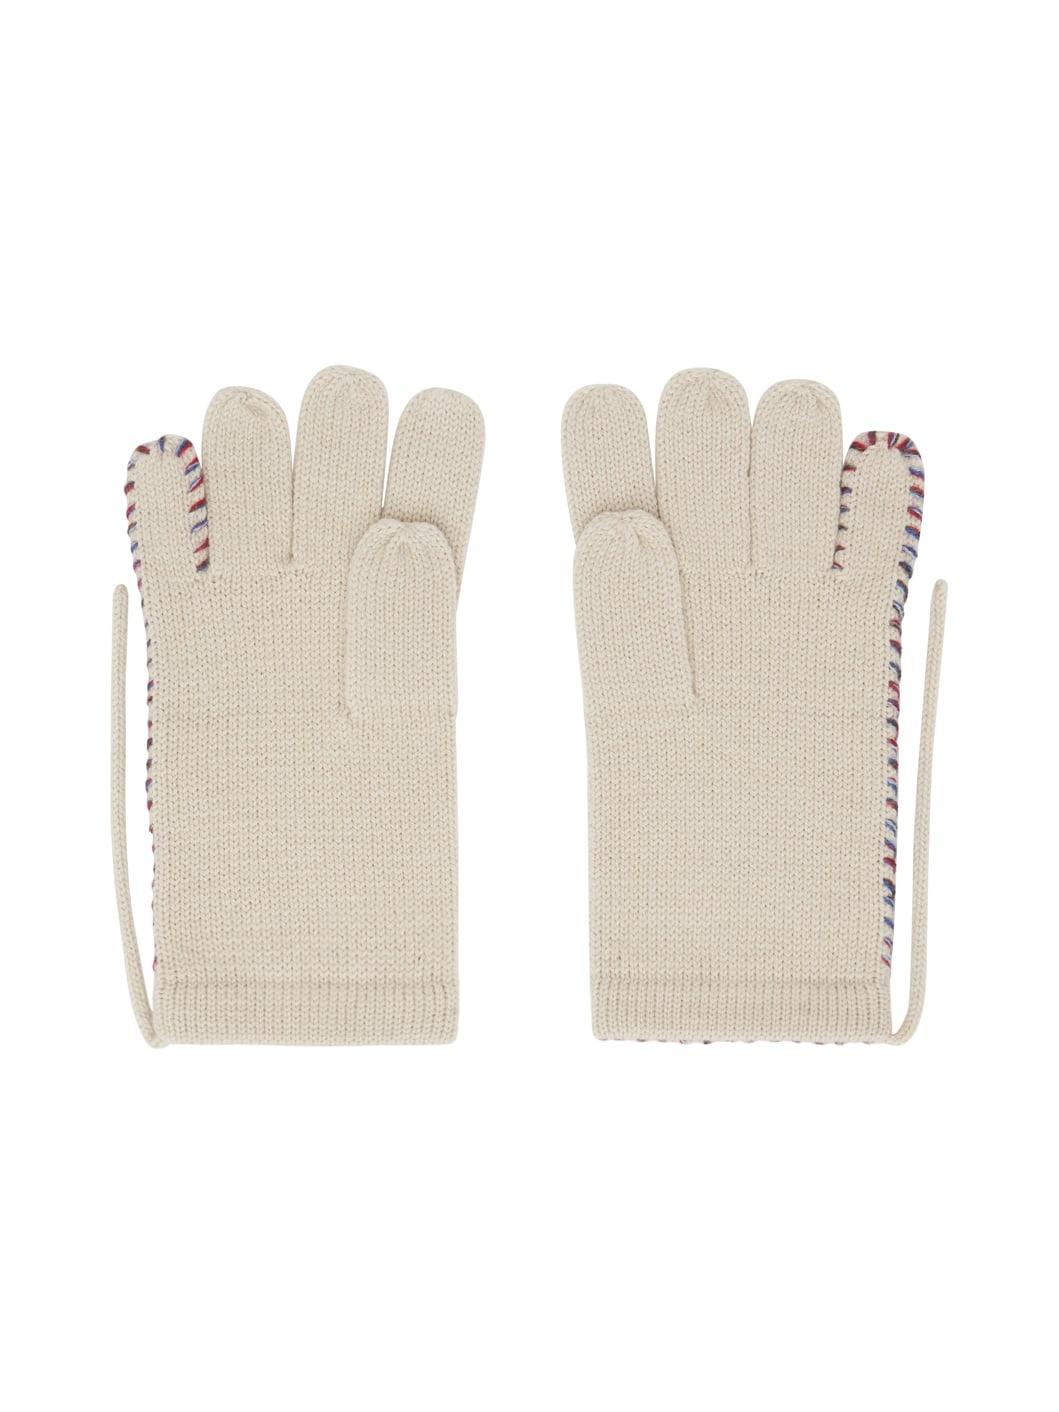 Off-White Tiny Star Gloves - 2